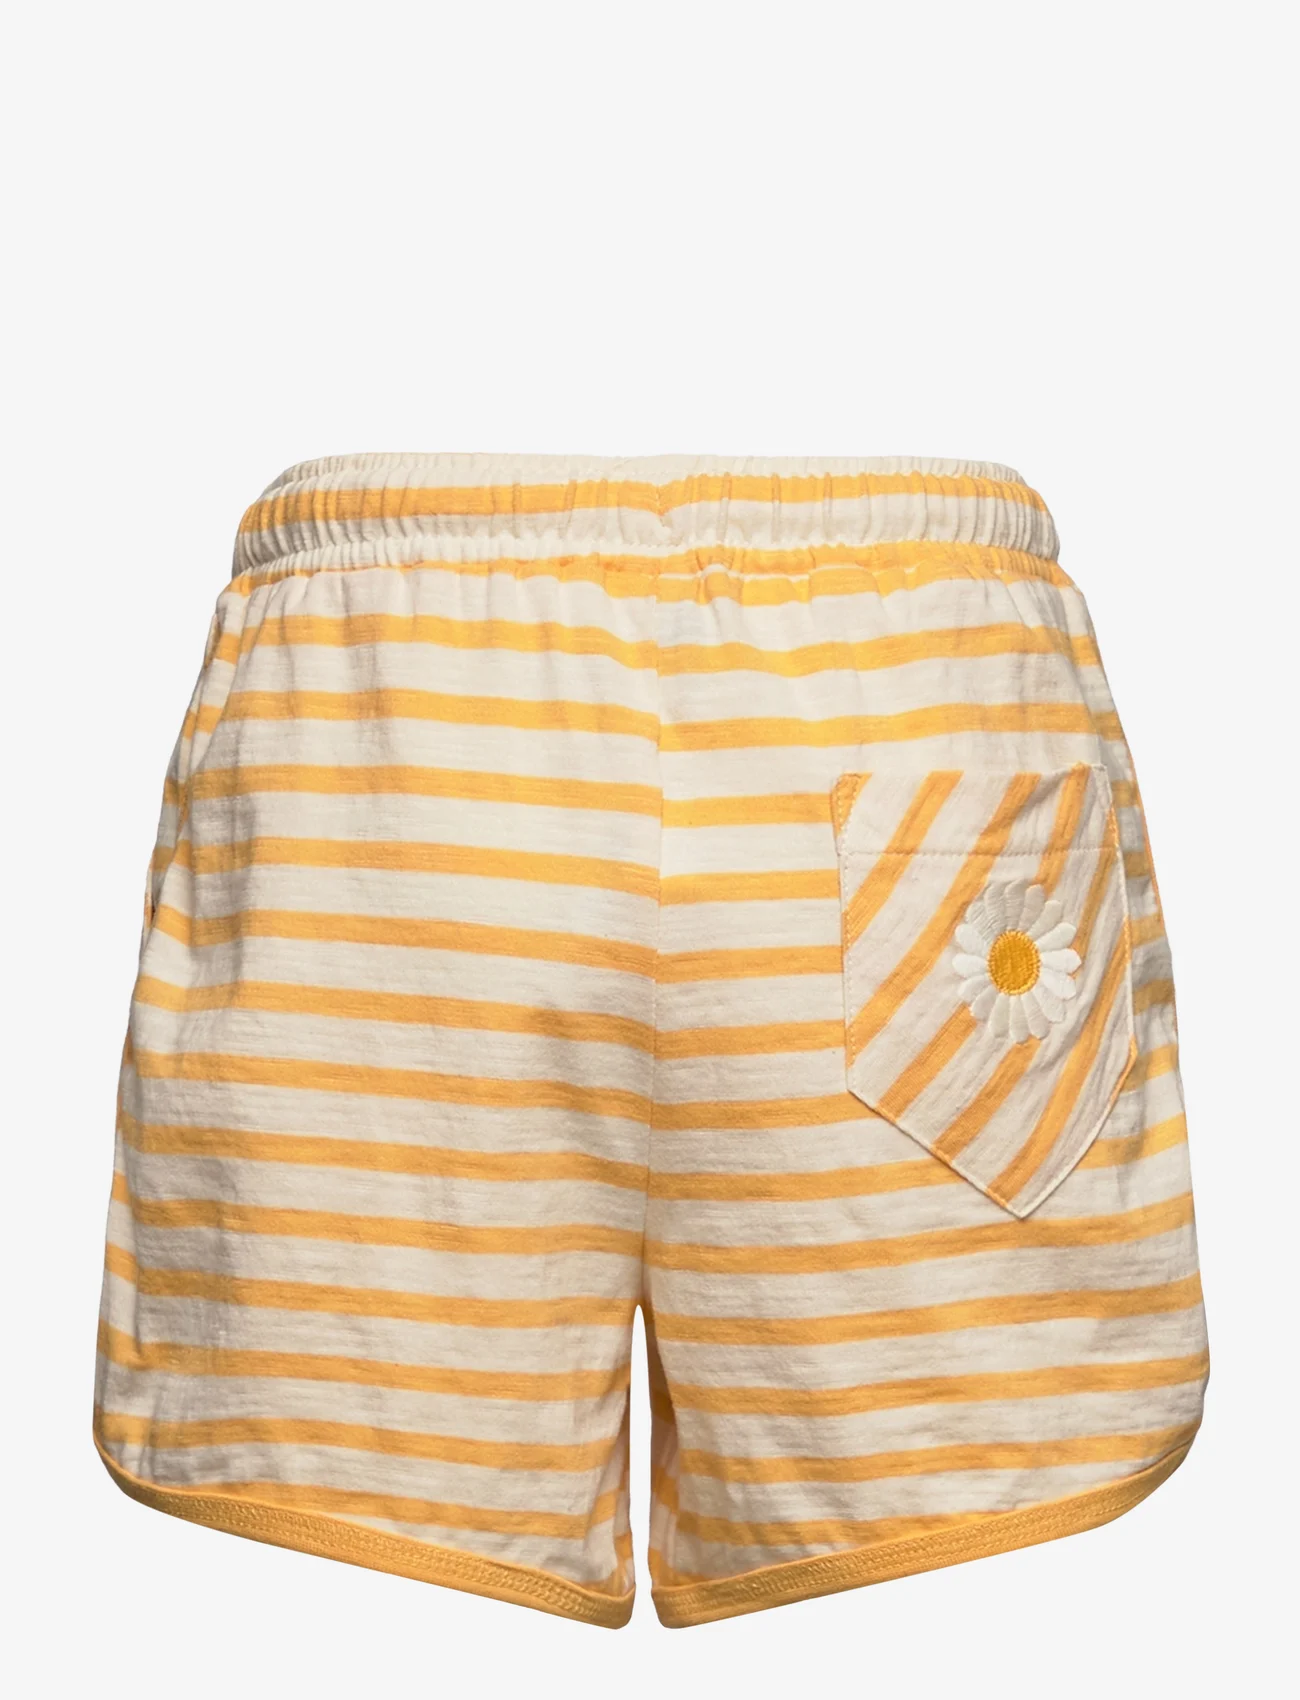 ebbe Kids - Sofia shorts - collegeshortsit - yellow stripe - 1